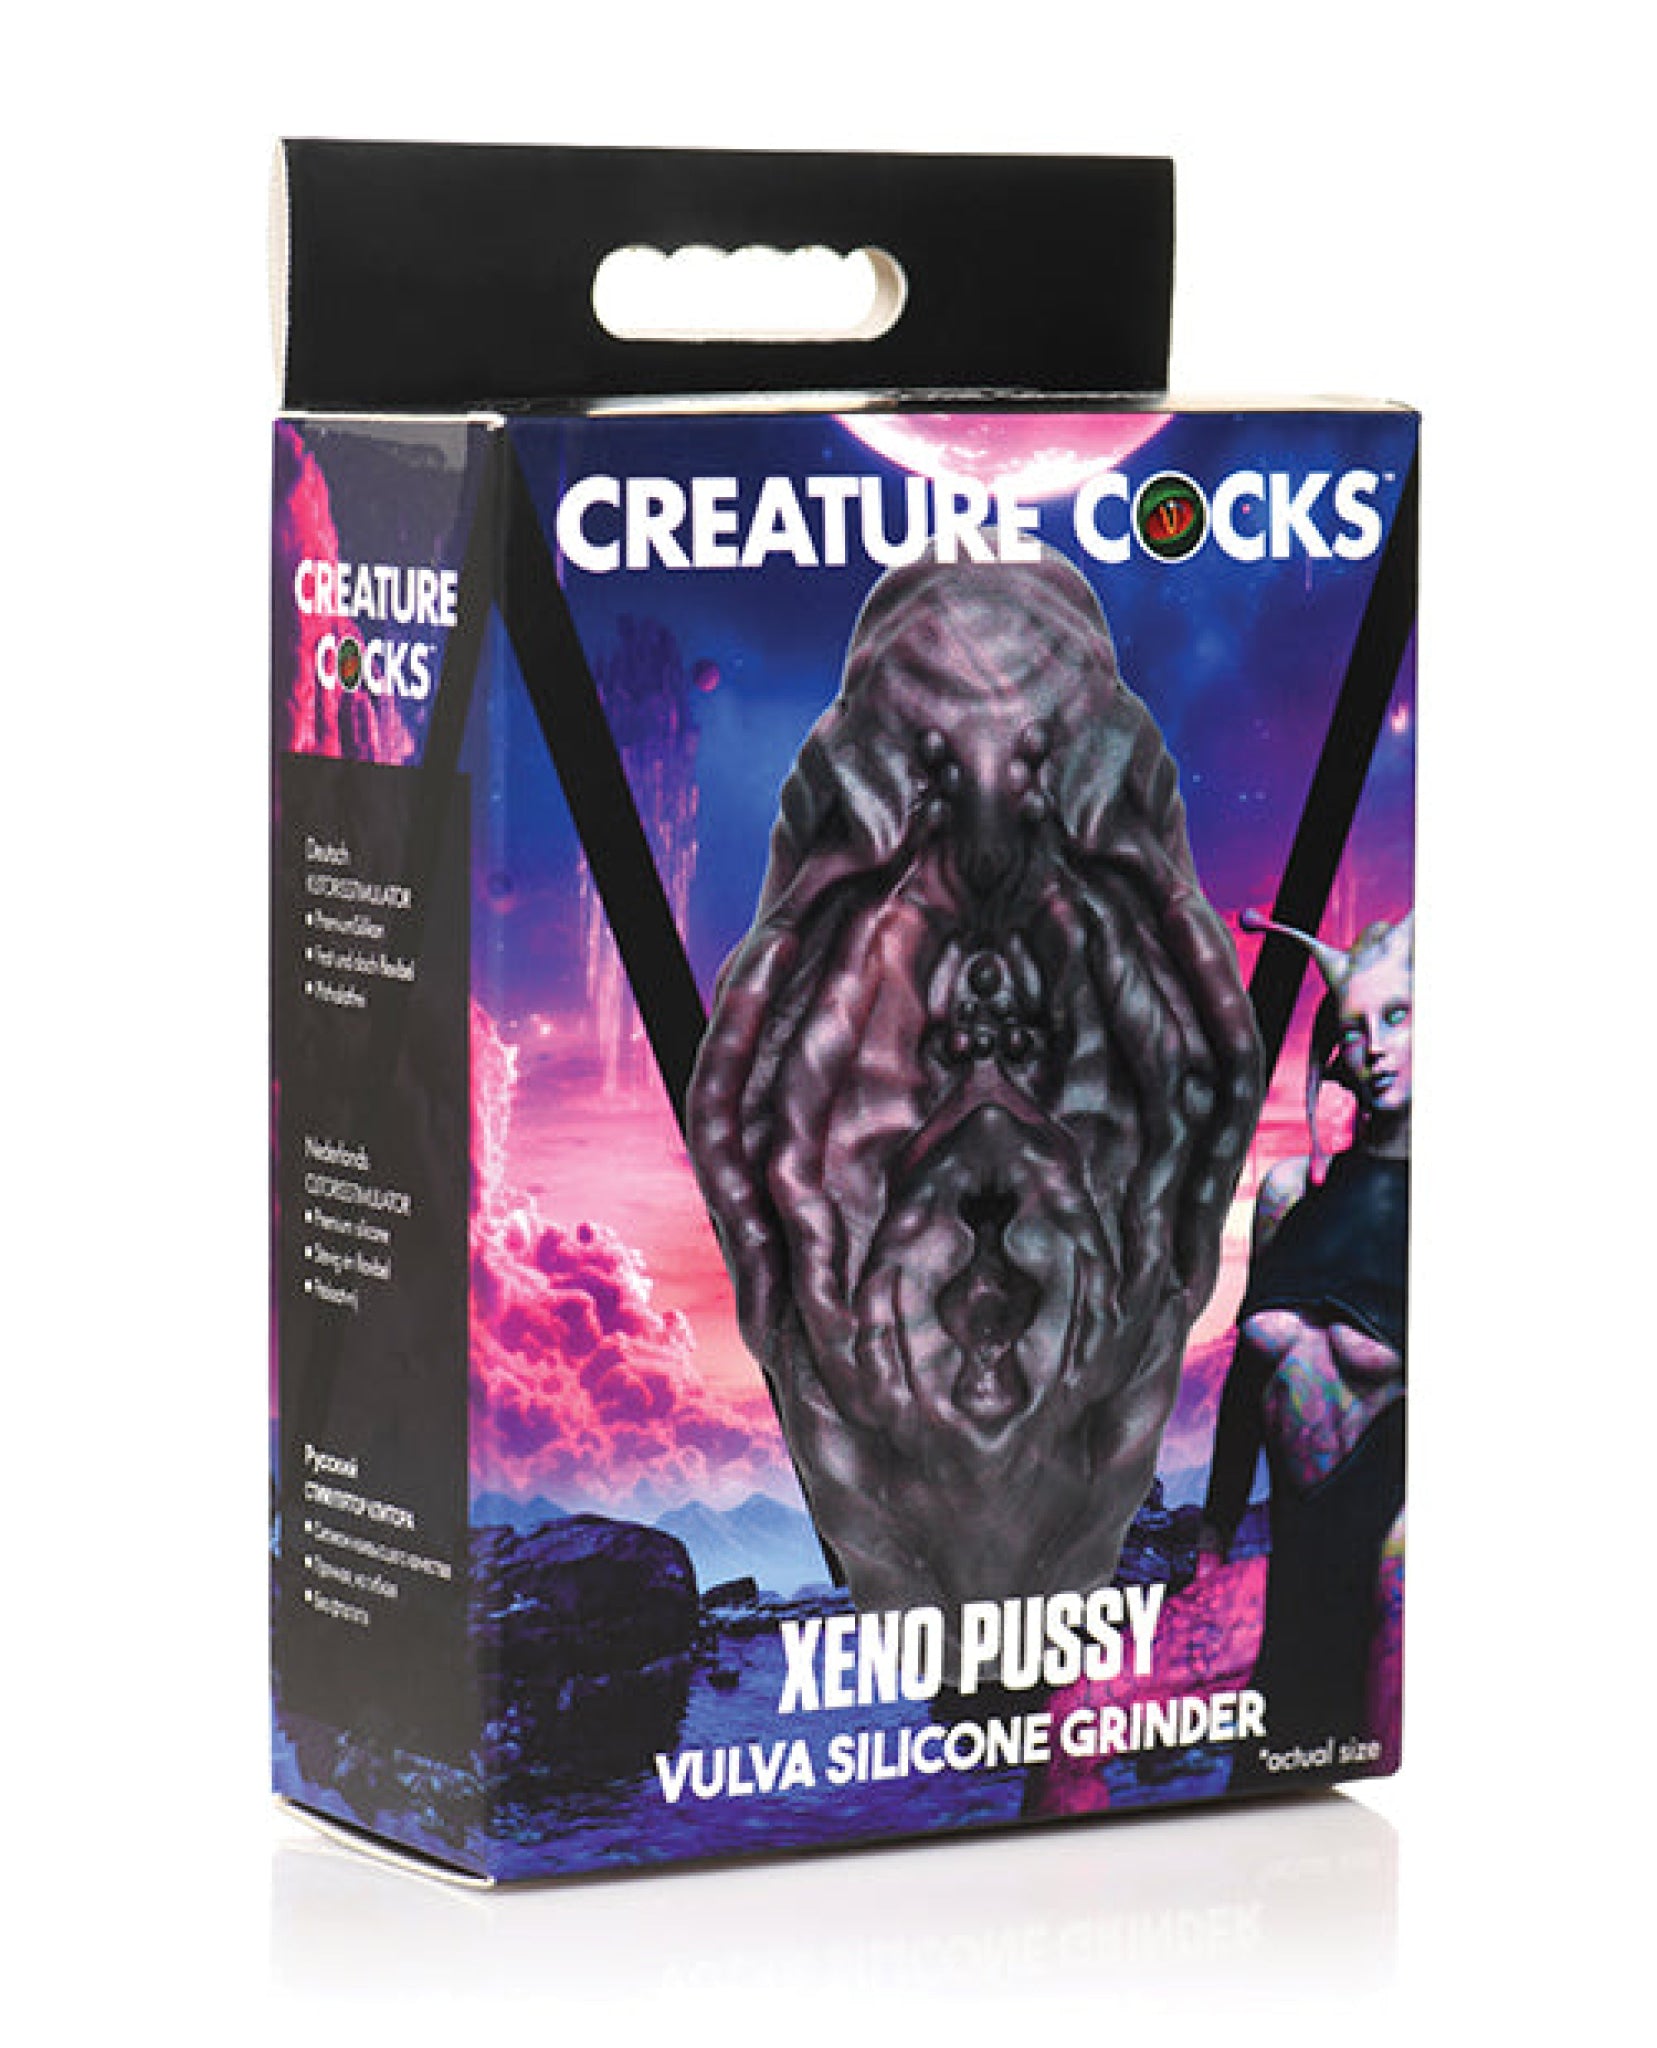 Creature Cocks Xeno Pussy Vulva Silicone Grinder - Multi Color Xr LLC